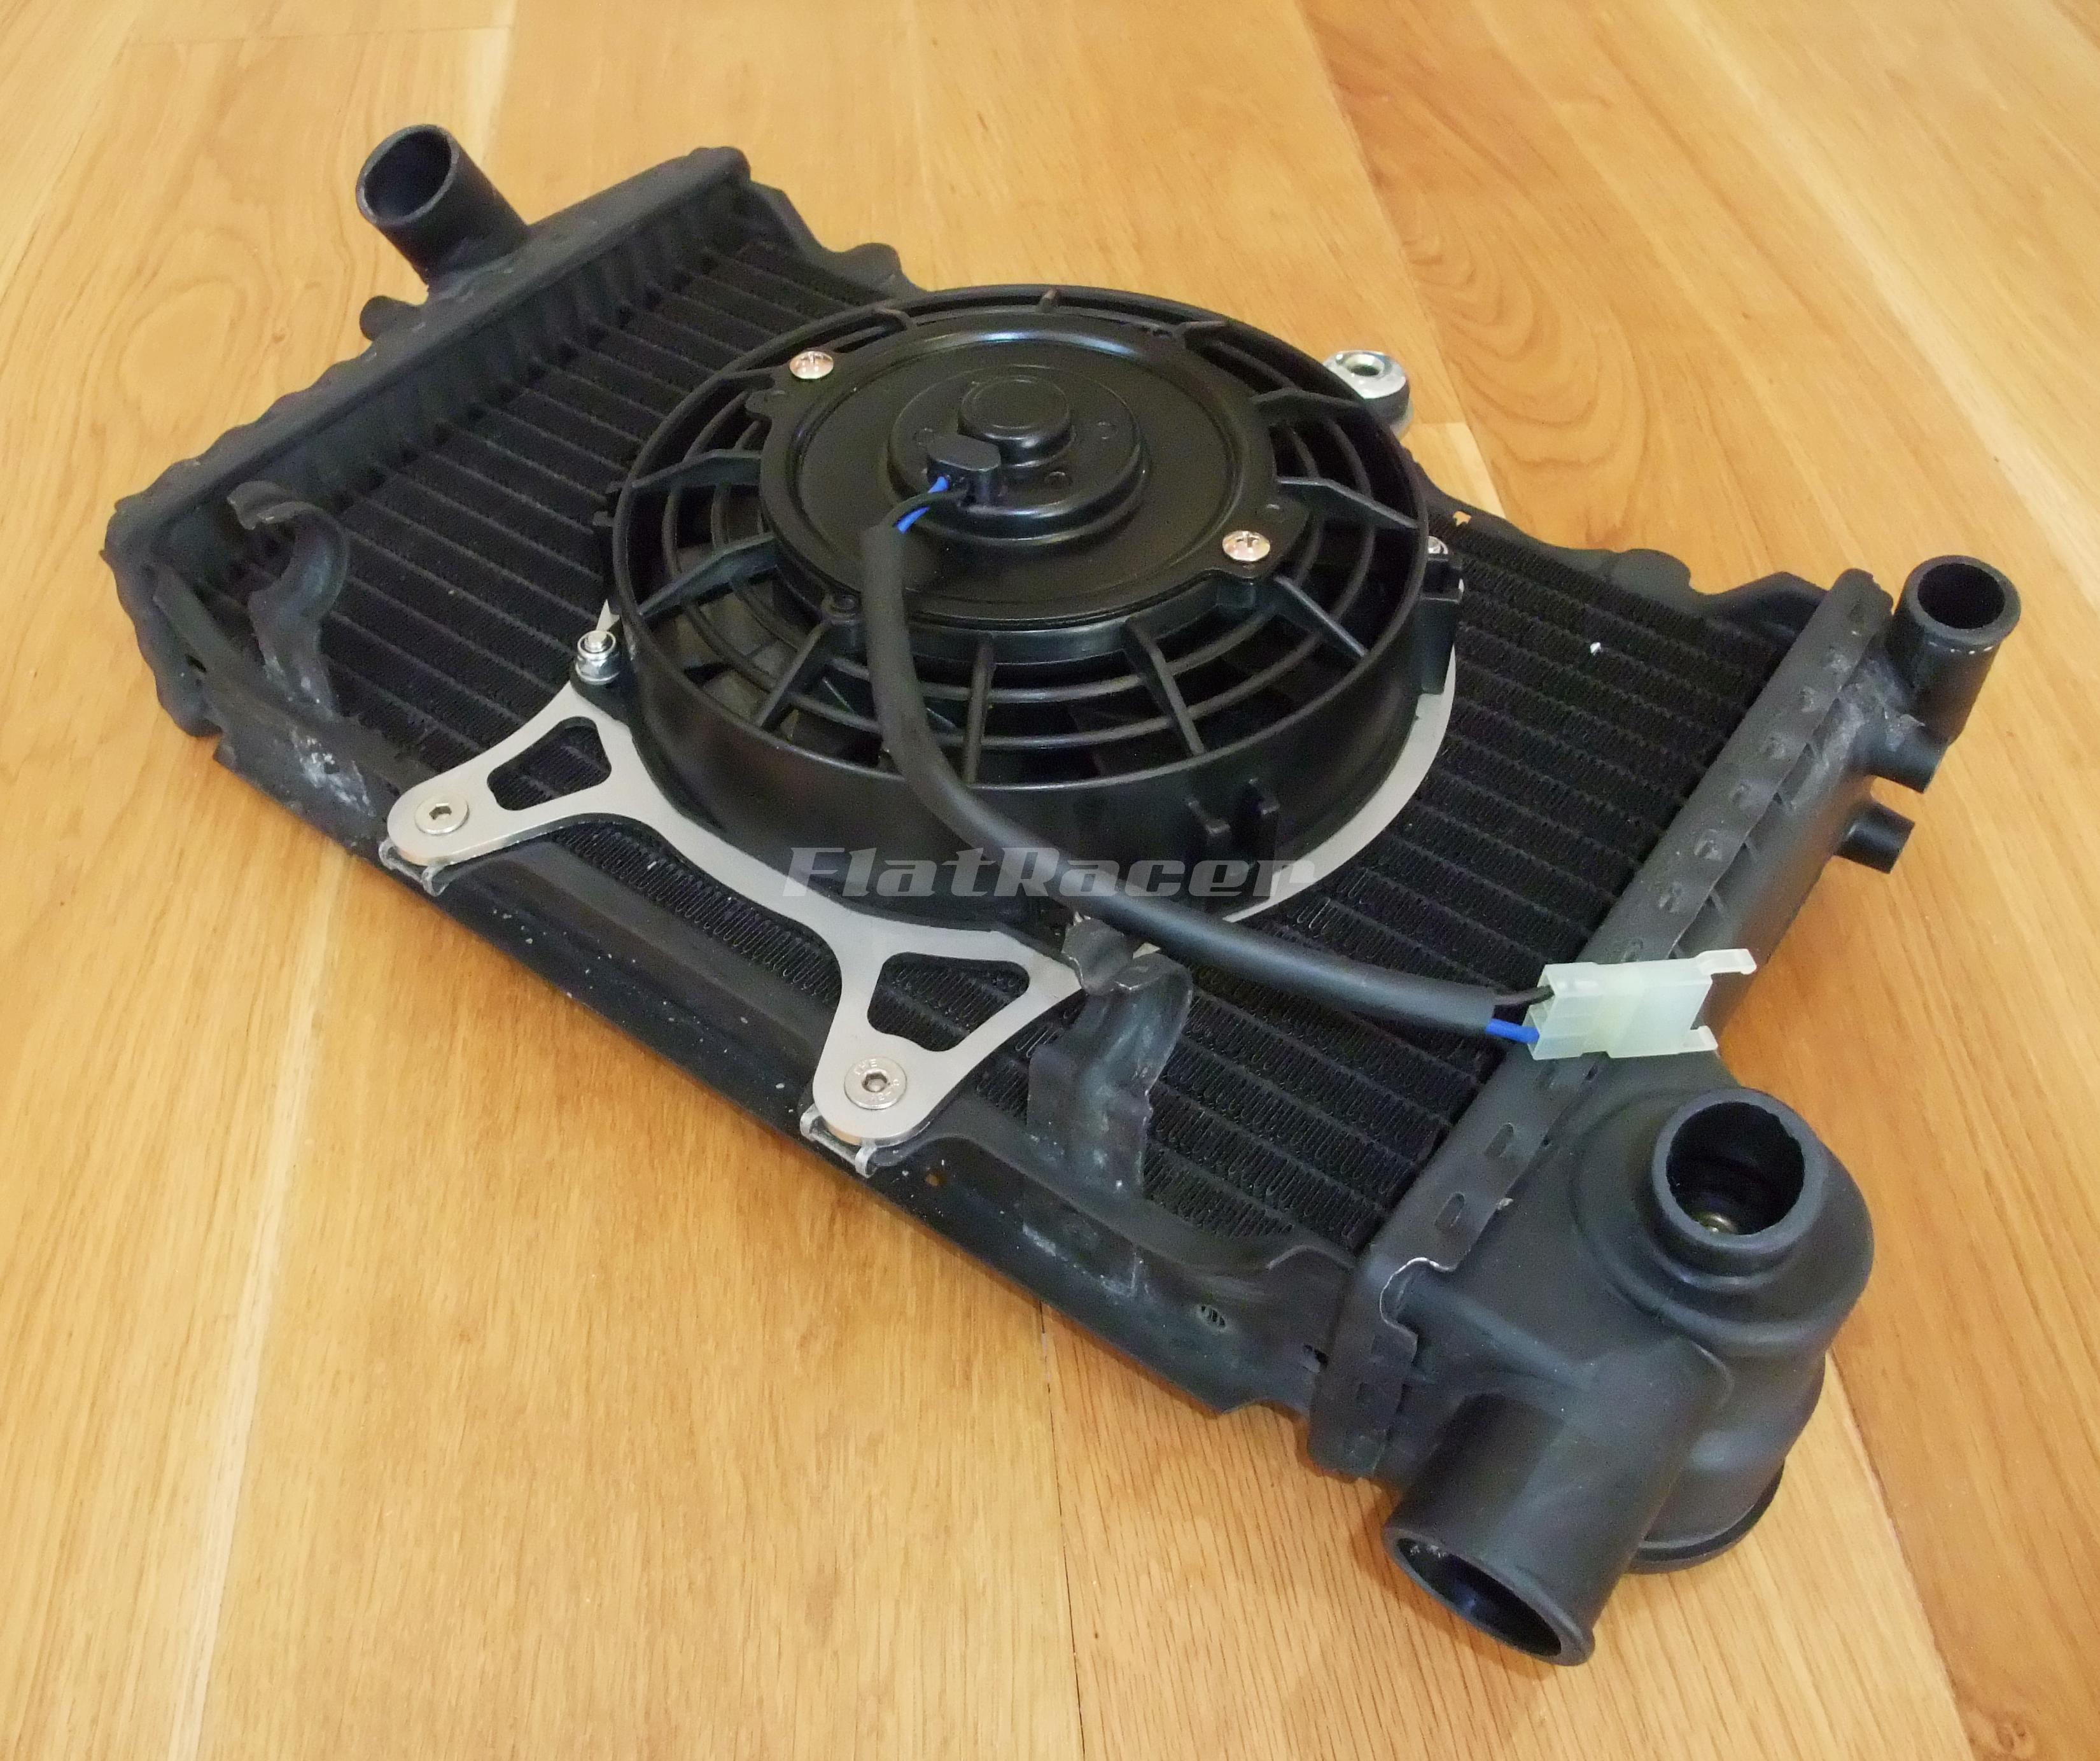 FlatRacer BMW K series radiator fan kit - fit K100, K75, K1 & K1100 models (83-96)